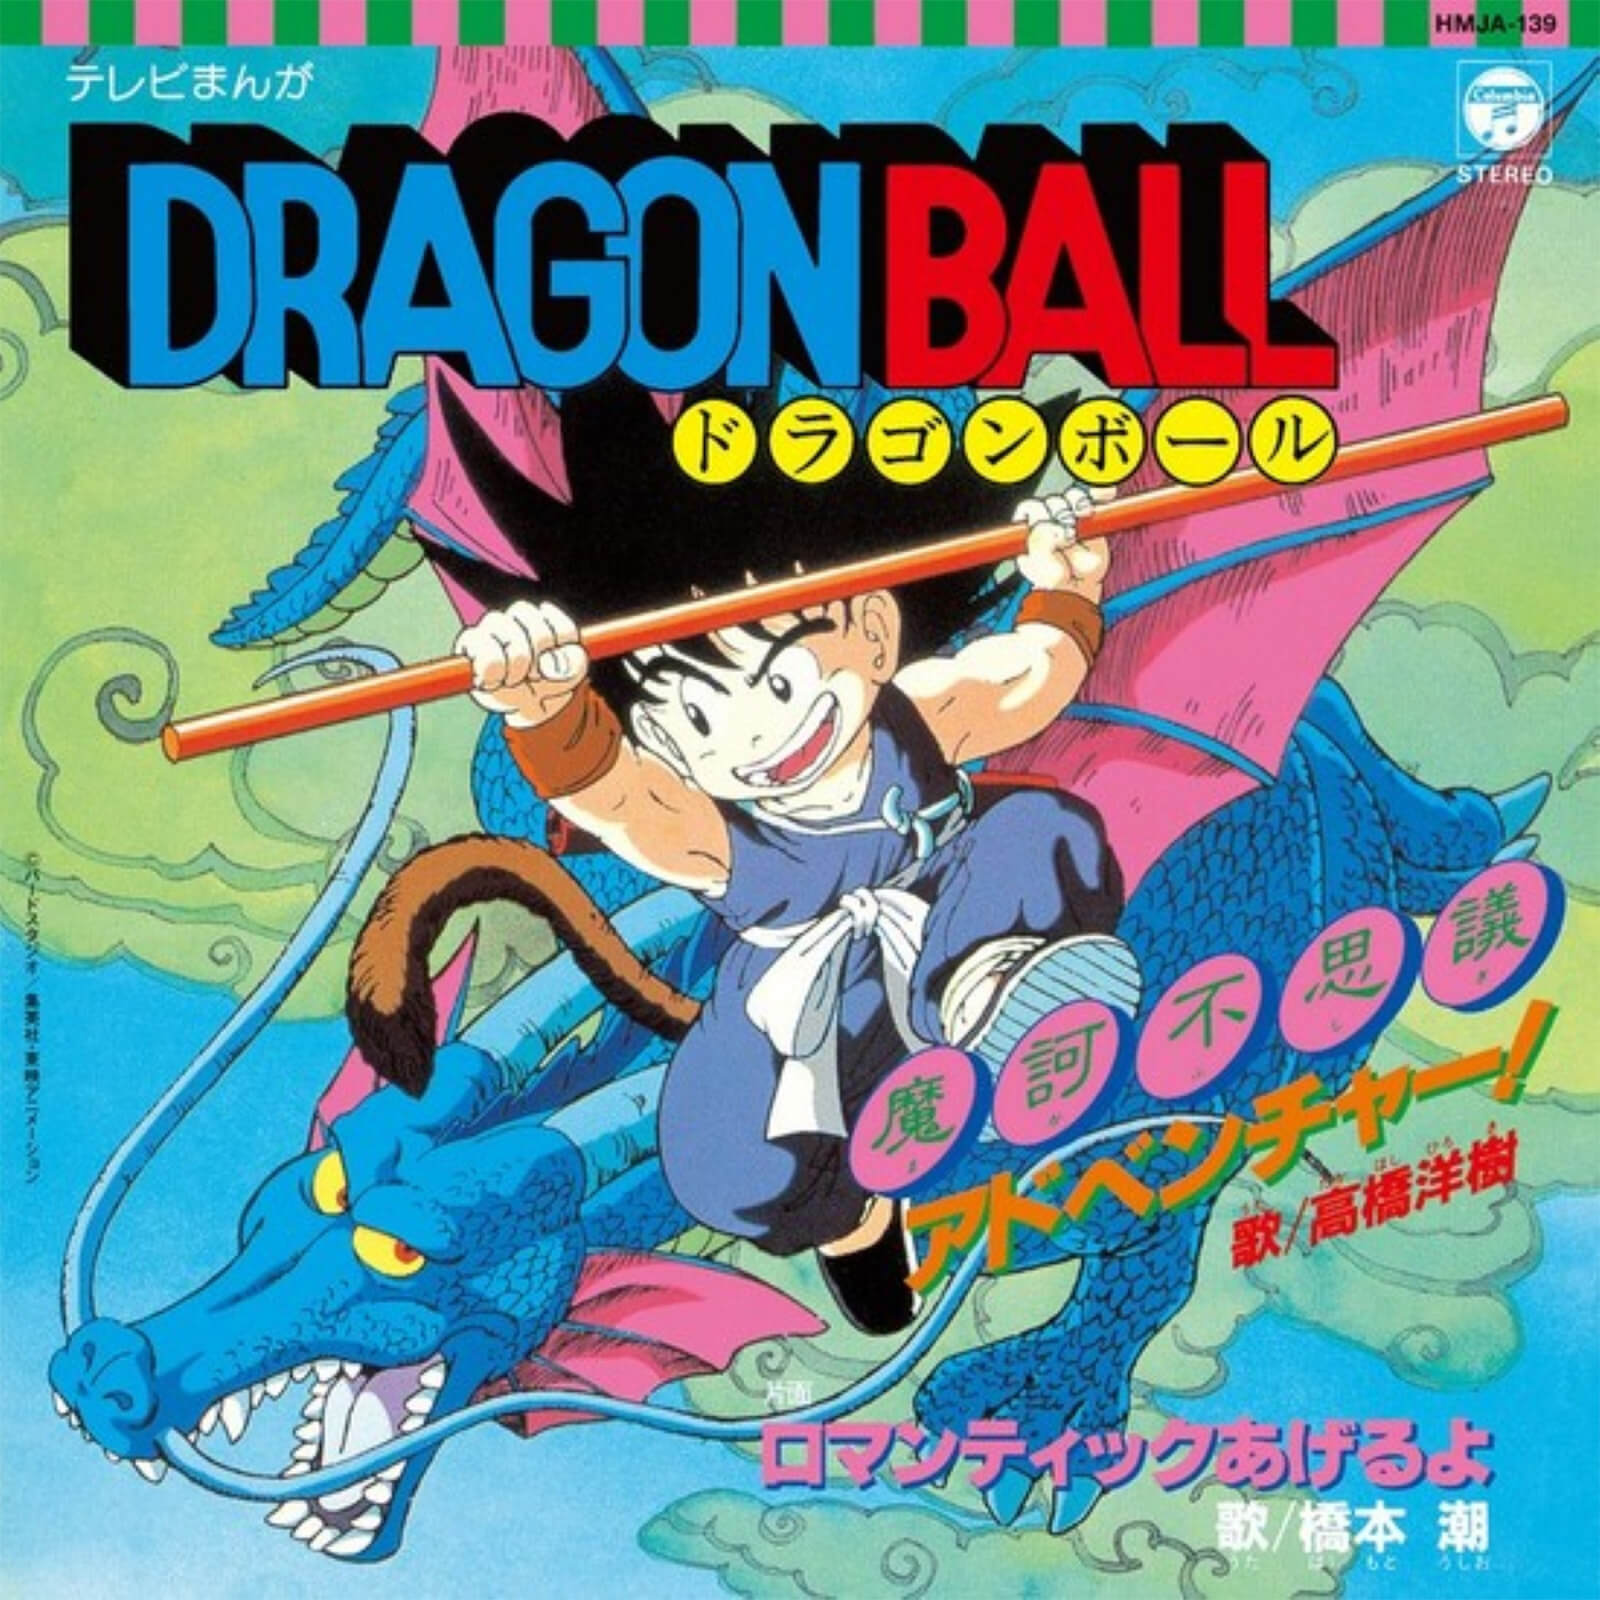 Hmv Record Shop - Dragon ball - makafushigi adventure! b/w romantic ageruyo 7